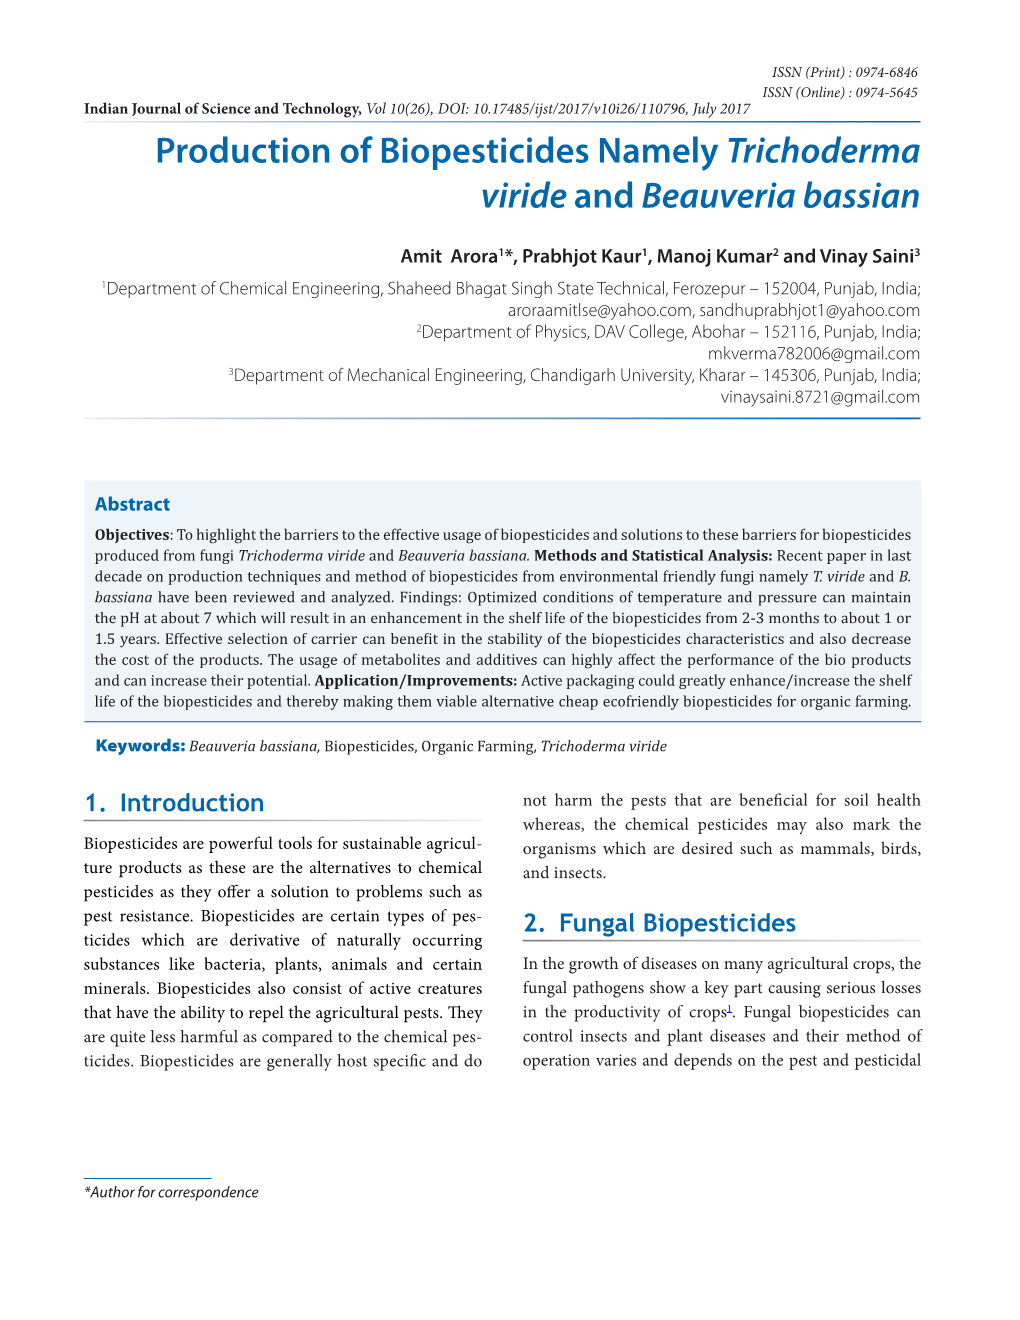 Production of Biopesticides Namely Trichoderma Viride Andbeauveria